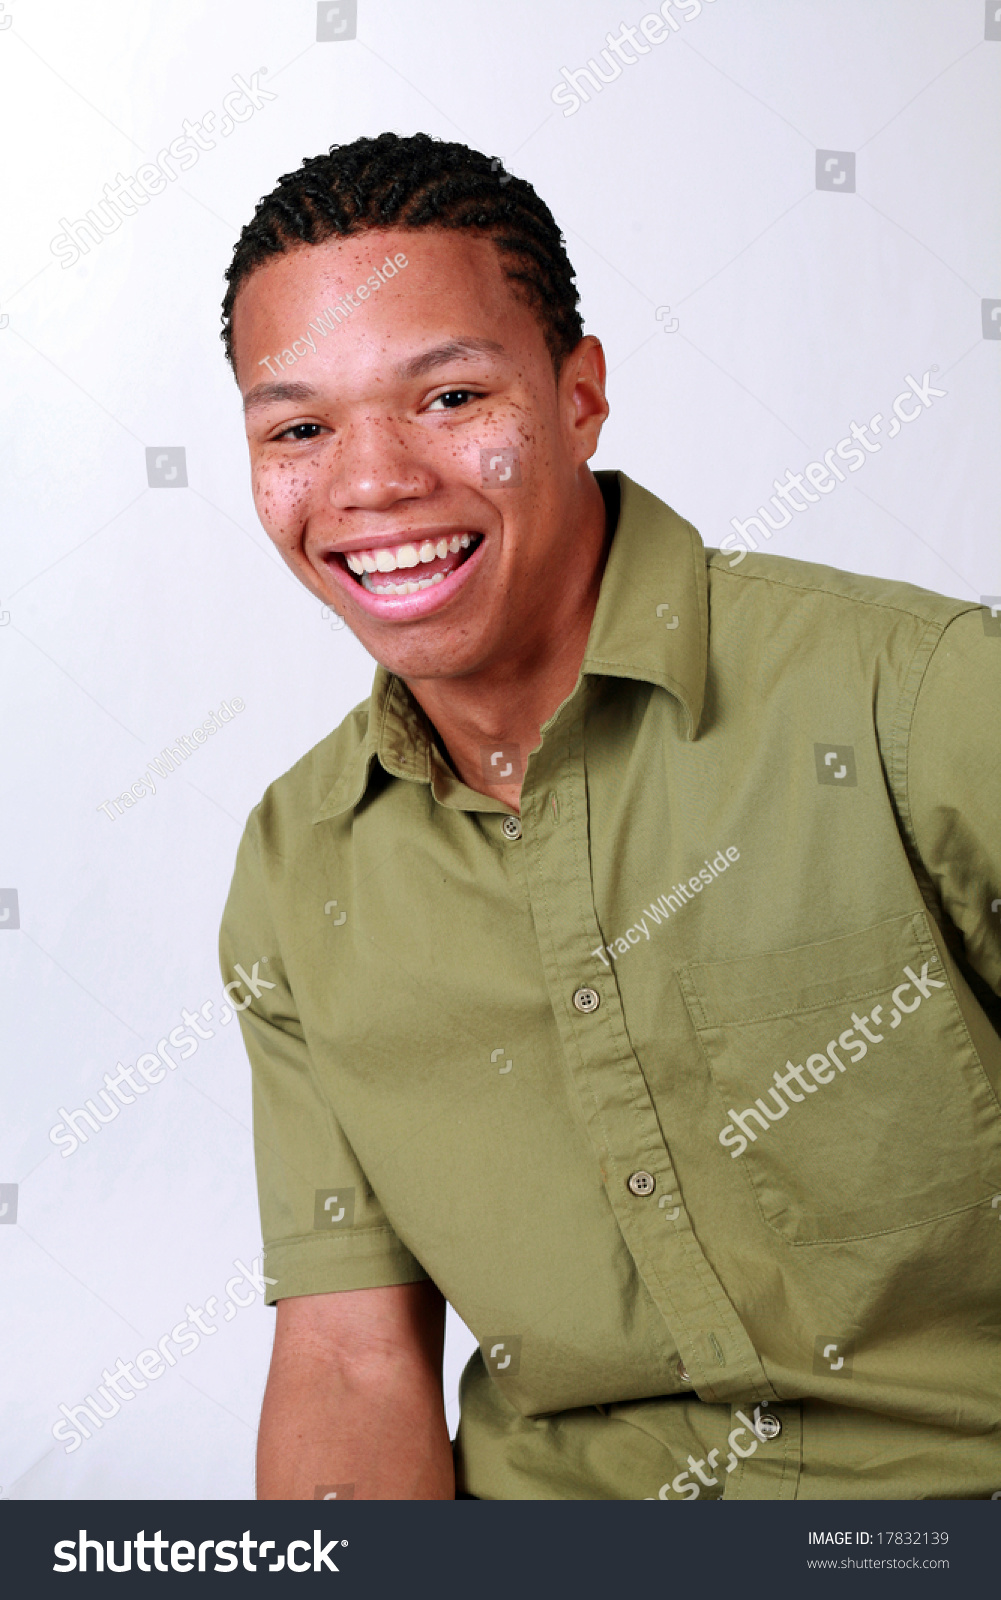 Teen Smiling Alt African American 80